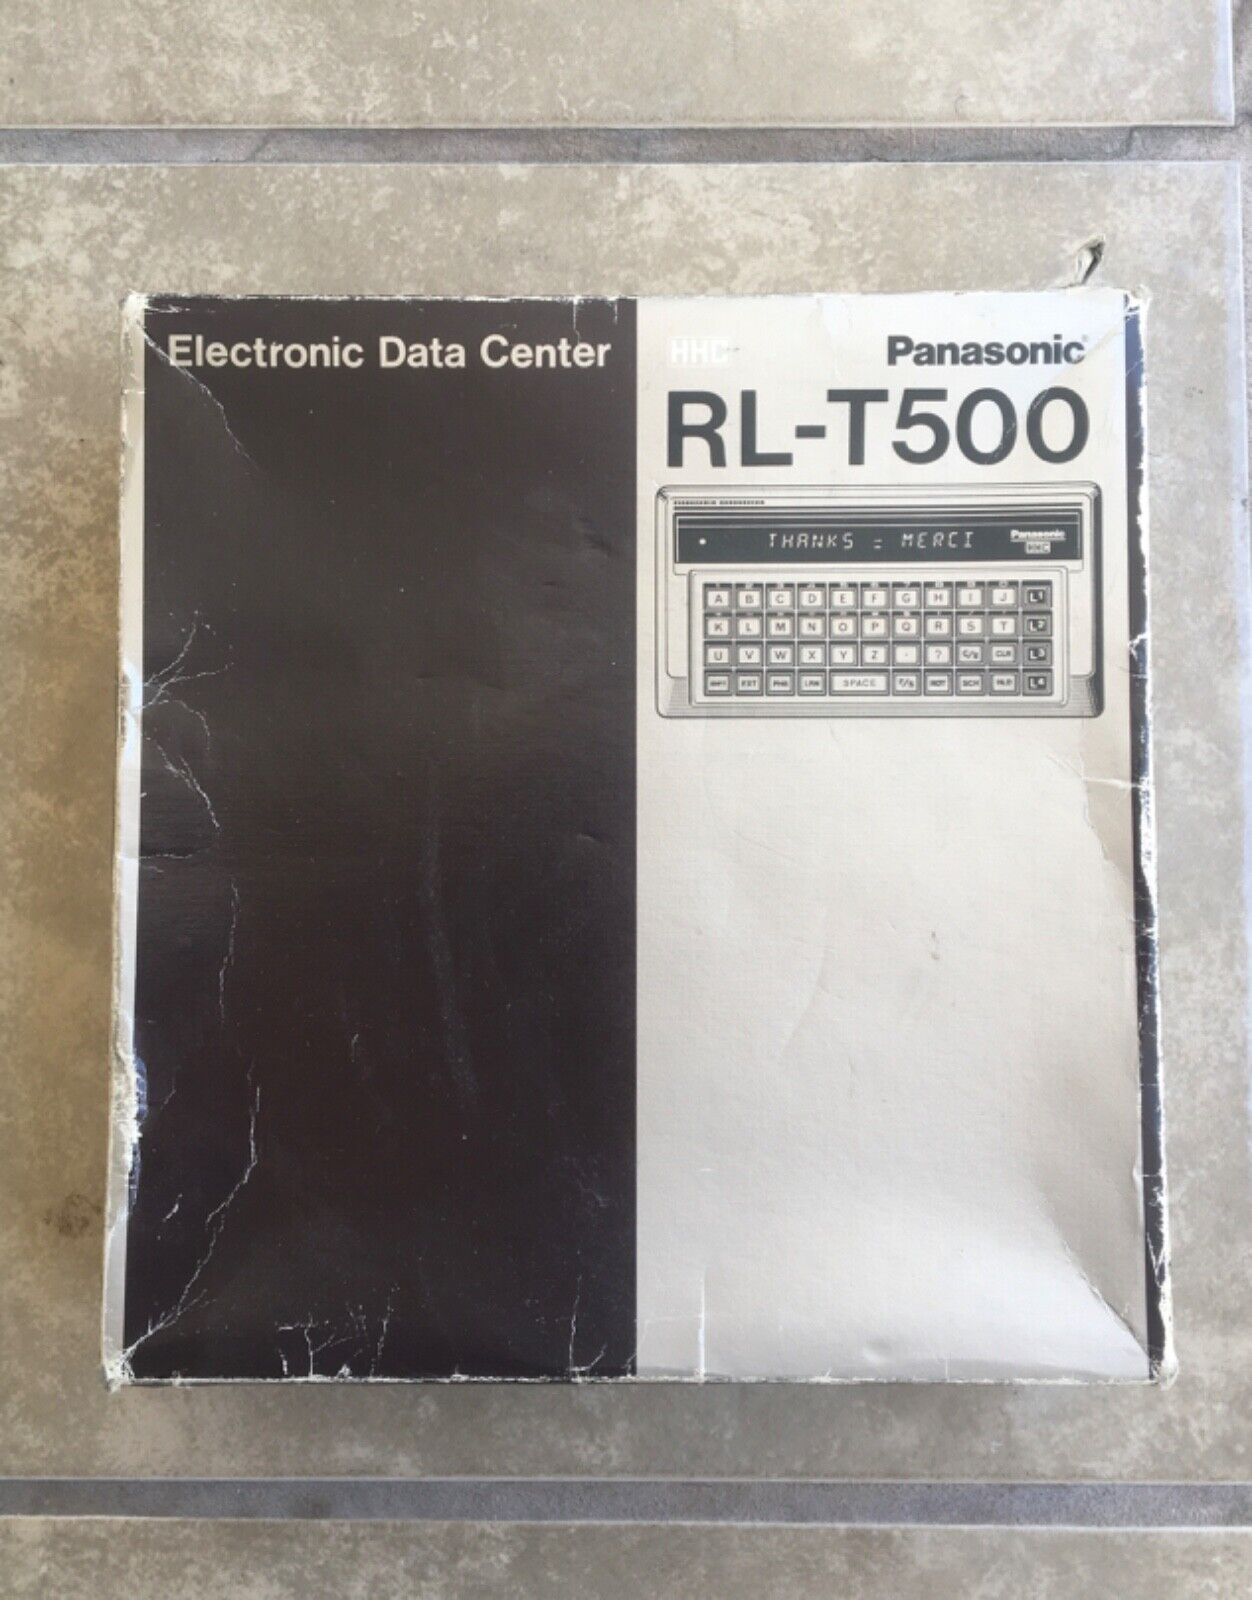 Panasonic RL-T500 Electronic Data Center HHC Pocket Translator Computer Vintage